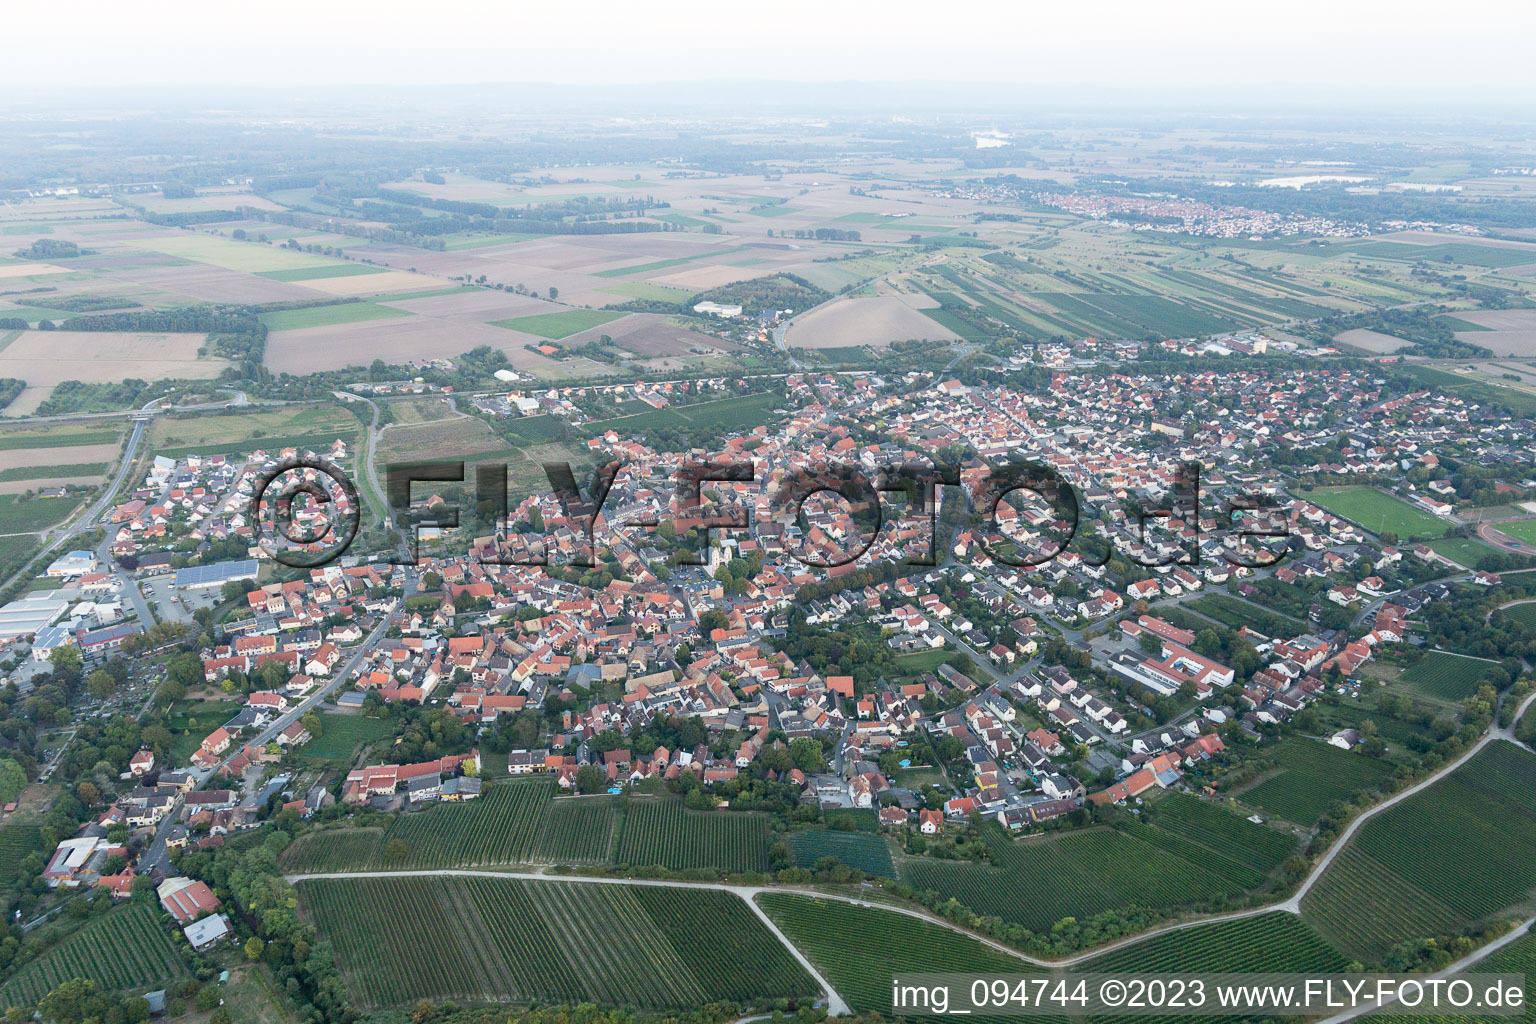 Drone recording of Guntersblum in the state Rhineland-Palatinate, Germany